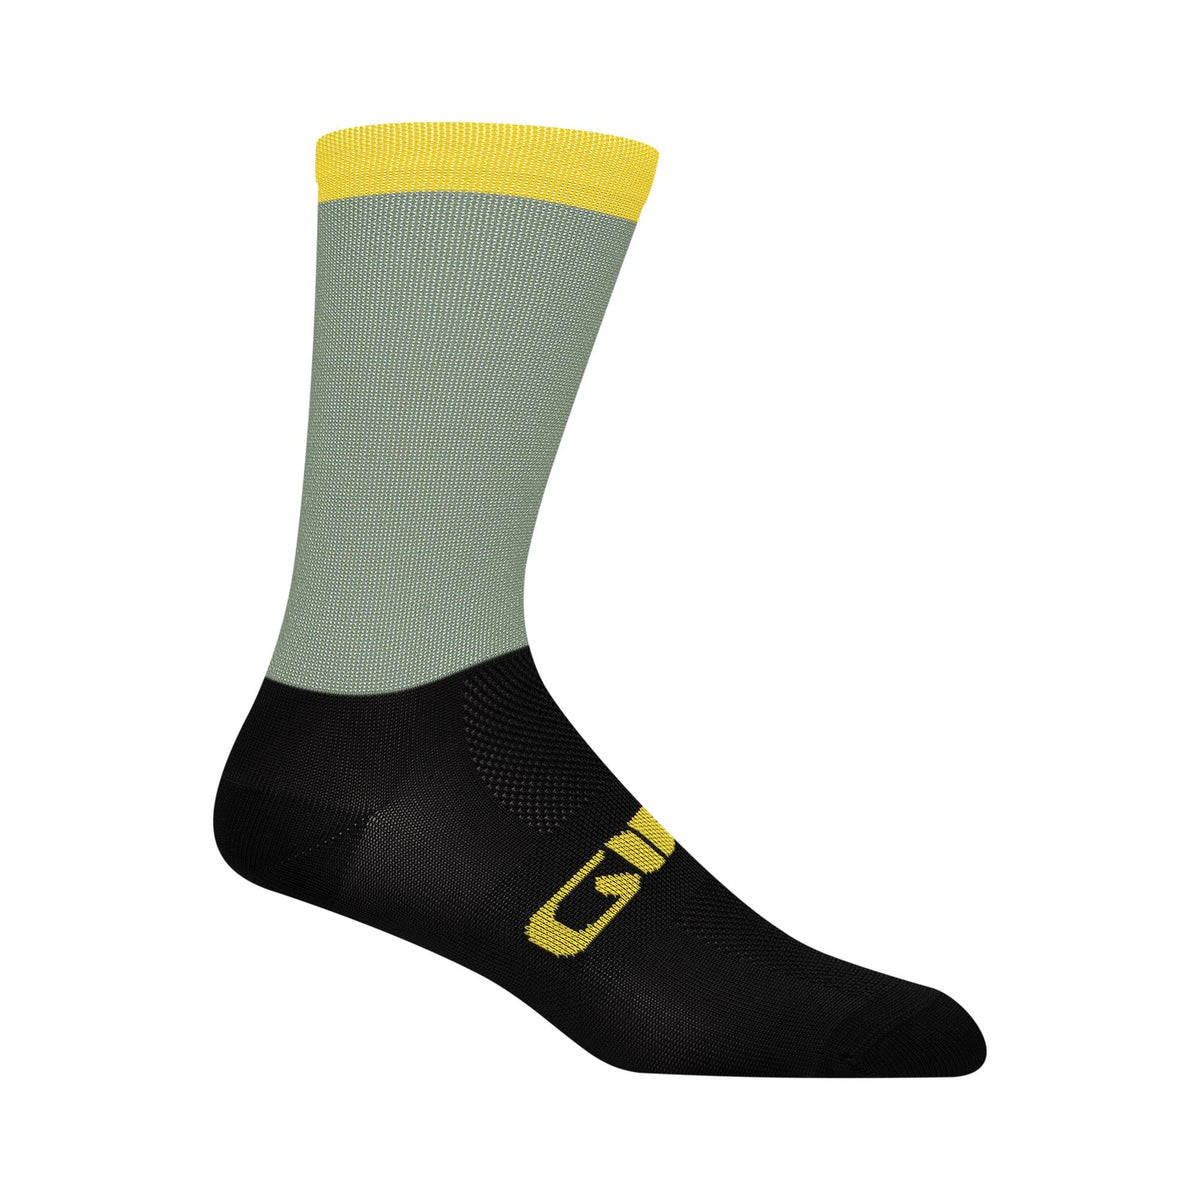 Giro Comp High Rise Cycling Socks - Wavy/Sardine Collection Grey Green XL